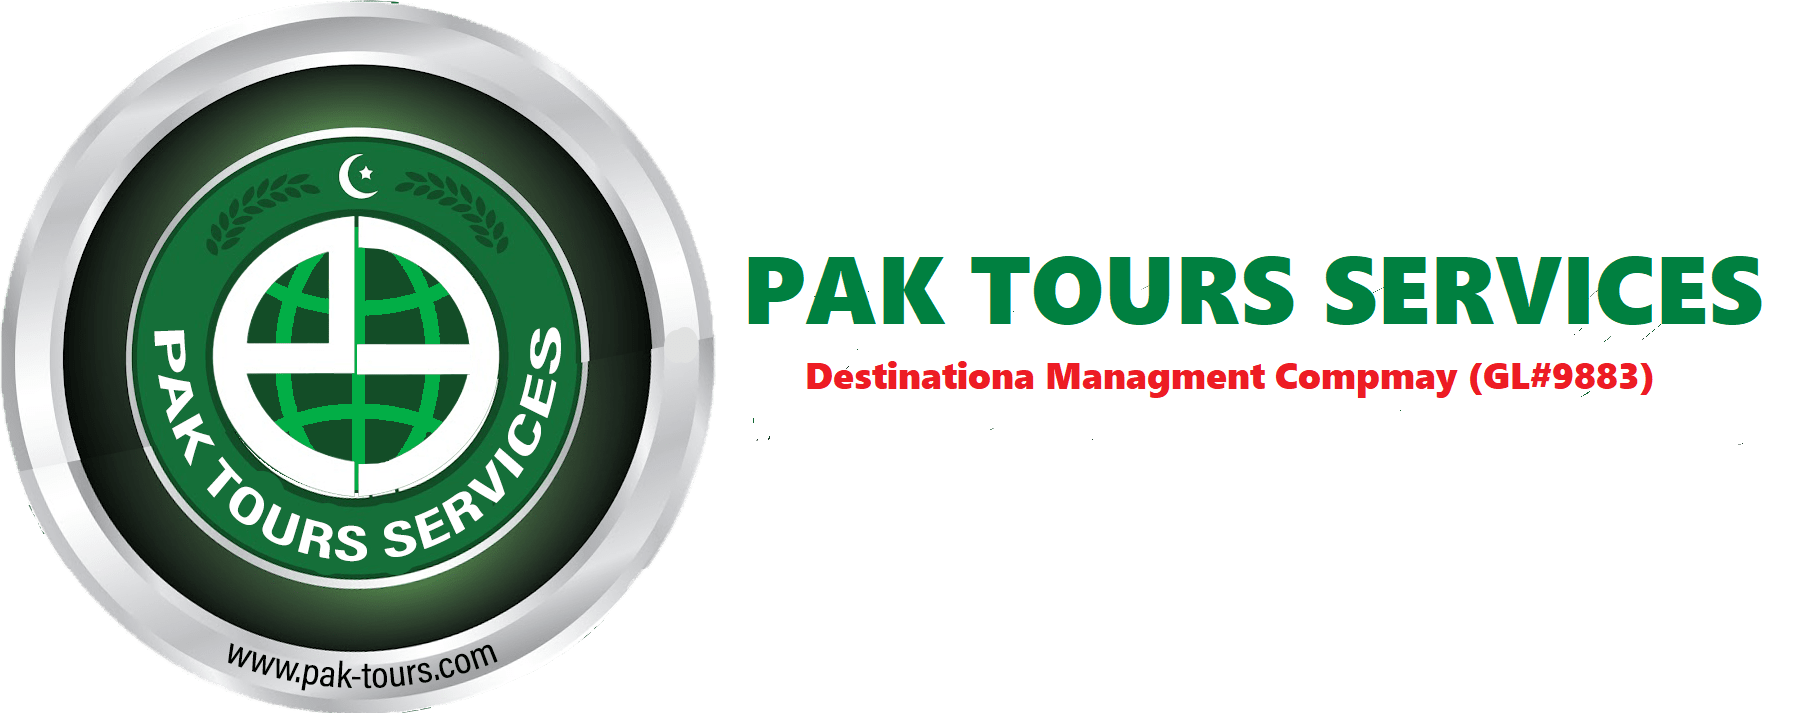 Your Trusted Travel Partner | Pakistan Tourism Archives - Your Trusted Travel Partner